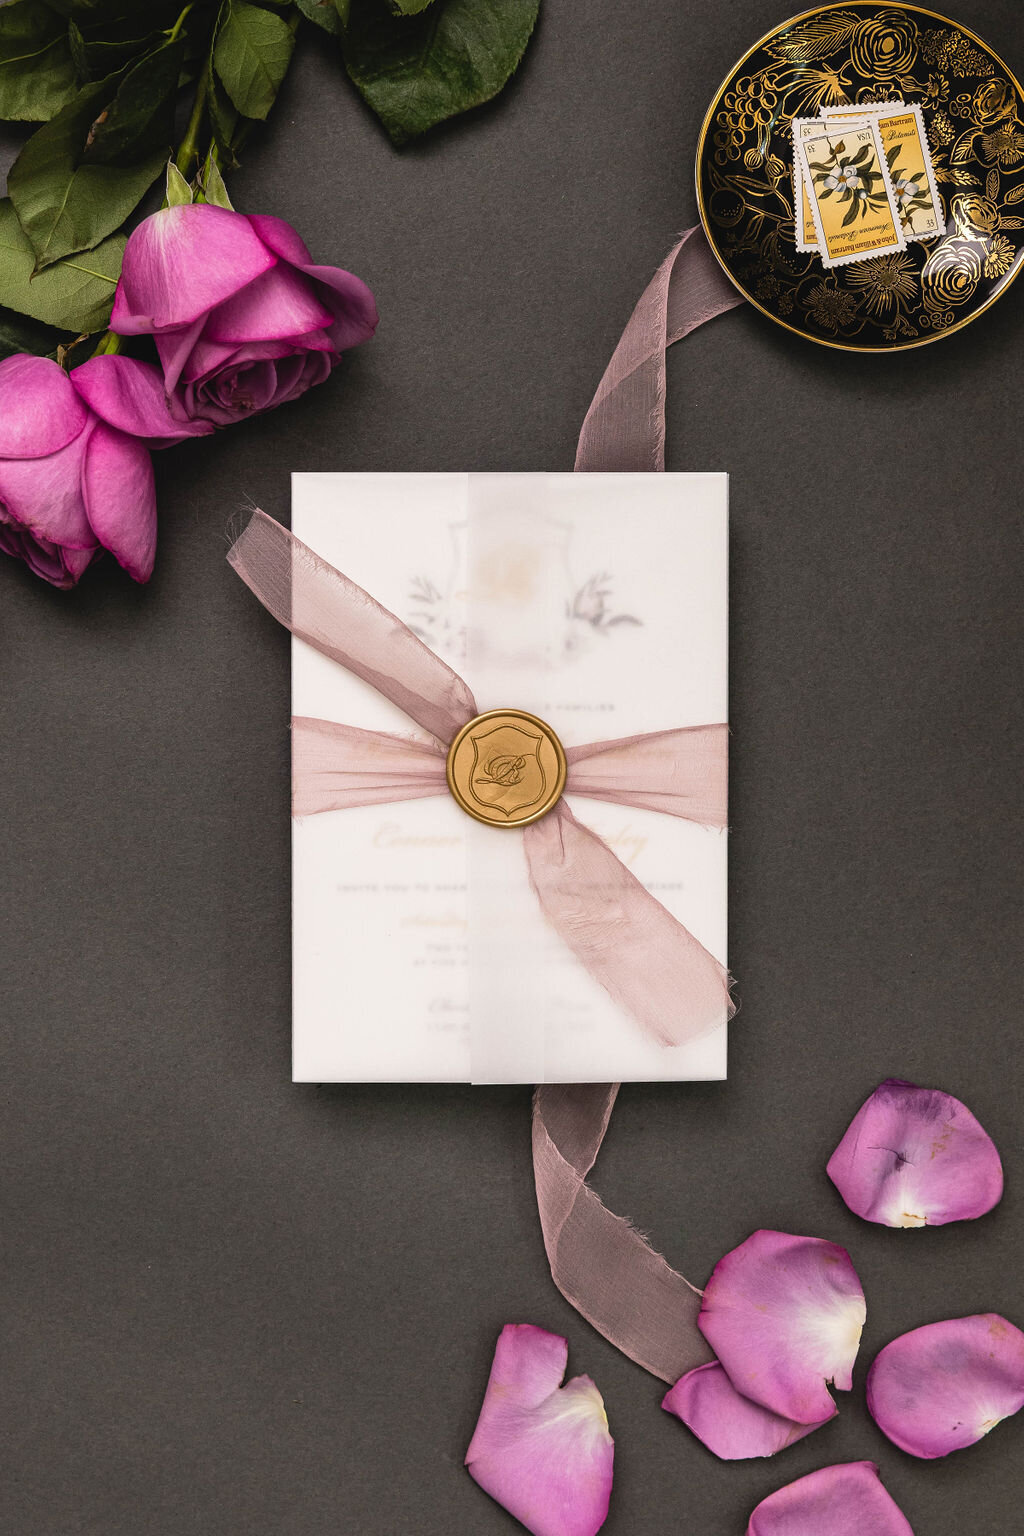 Custom wedding invitation designer, The Paper Vow, creates invitations from scratch